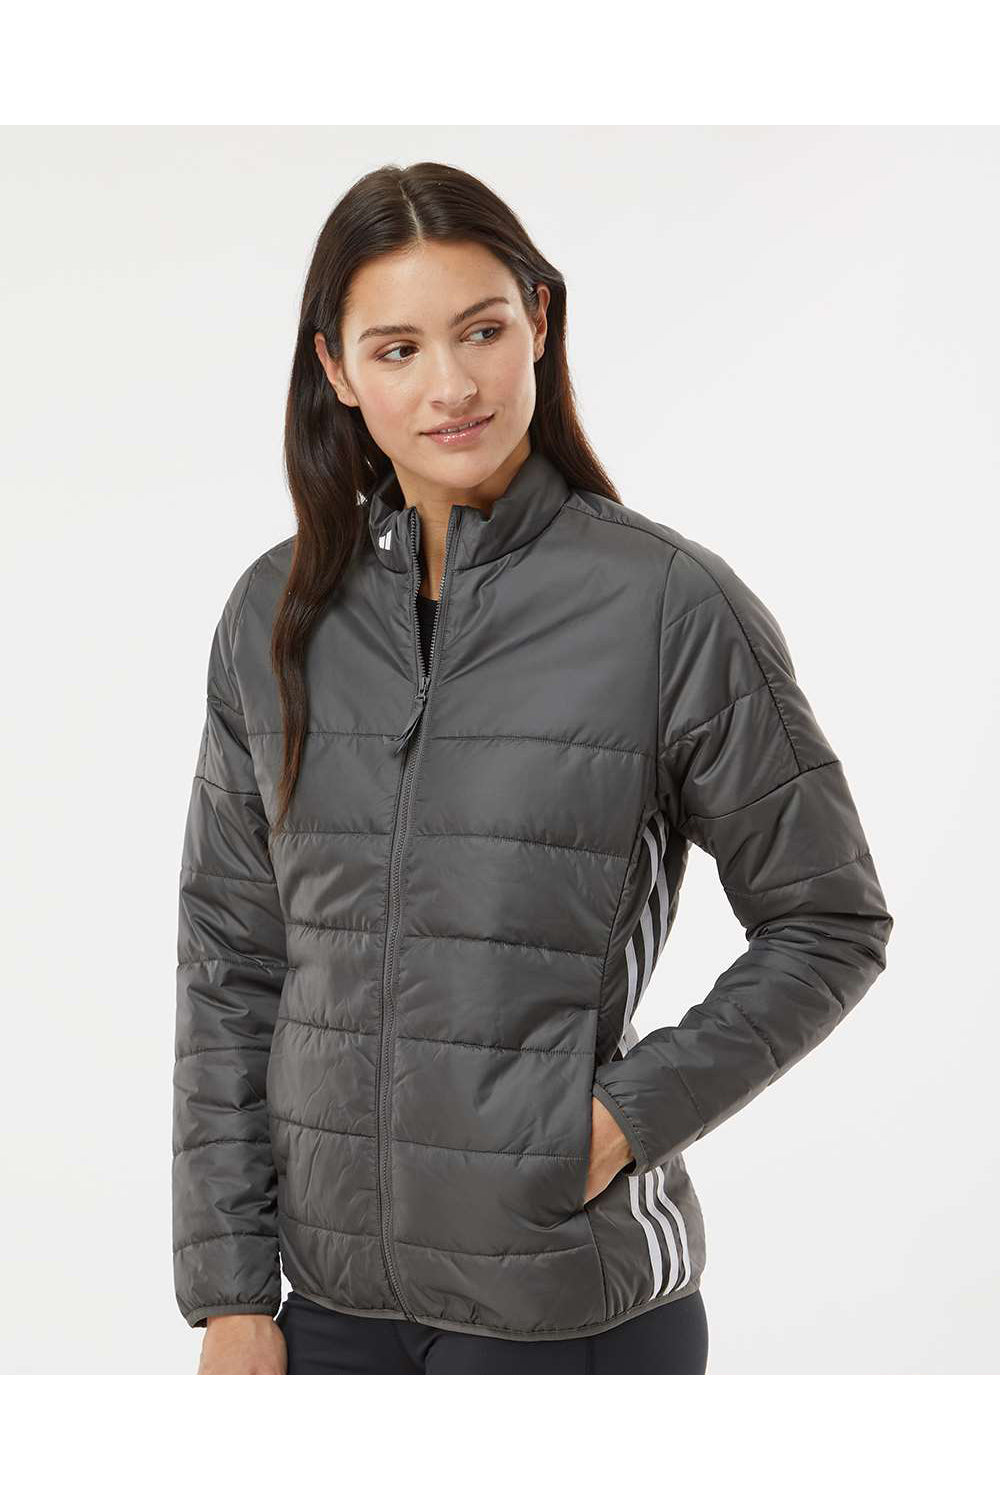 Adidas A571 Womens Full Zip Puffer Jacket Grey Model Side